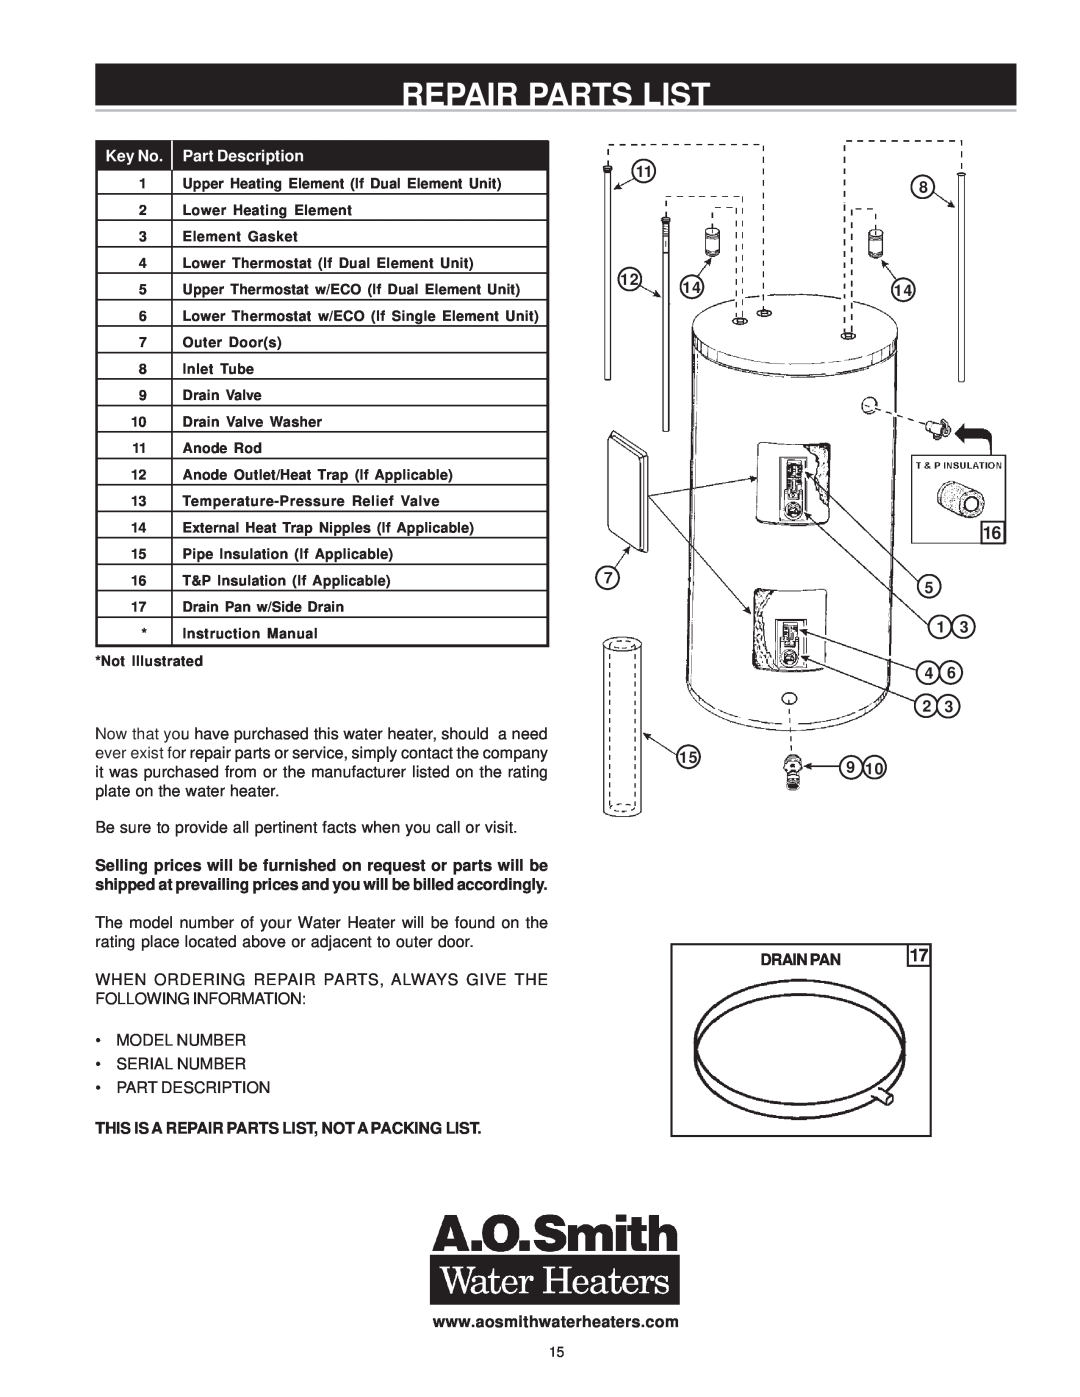 A.O. Smith WATER HEATERS instruction manual Repair Parts List, Part Description 